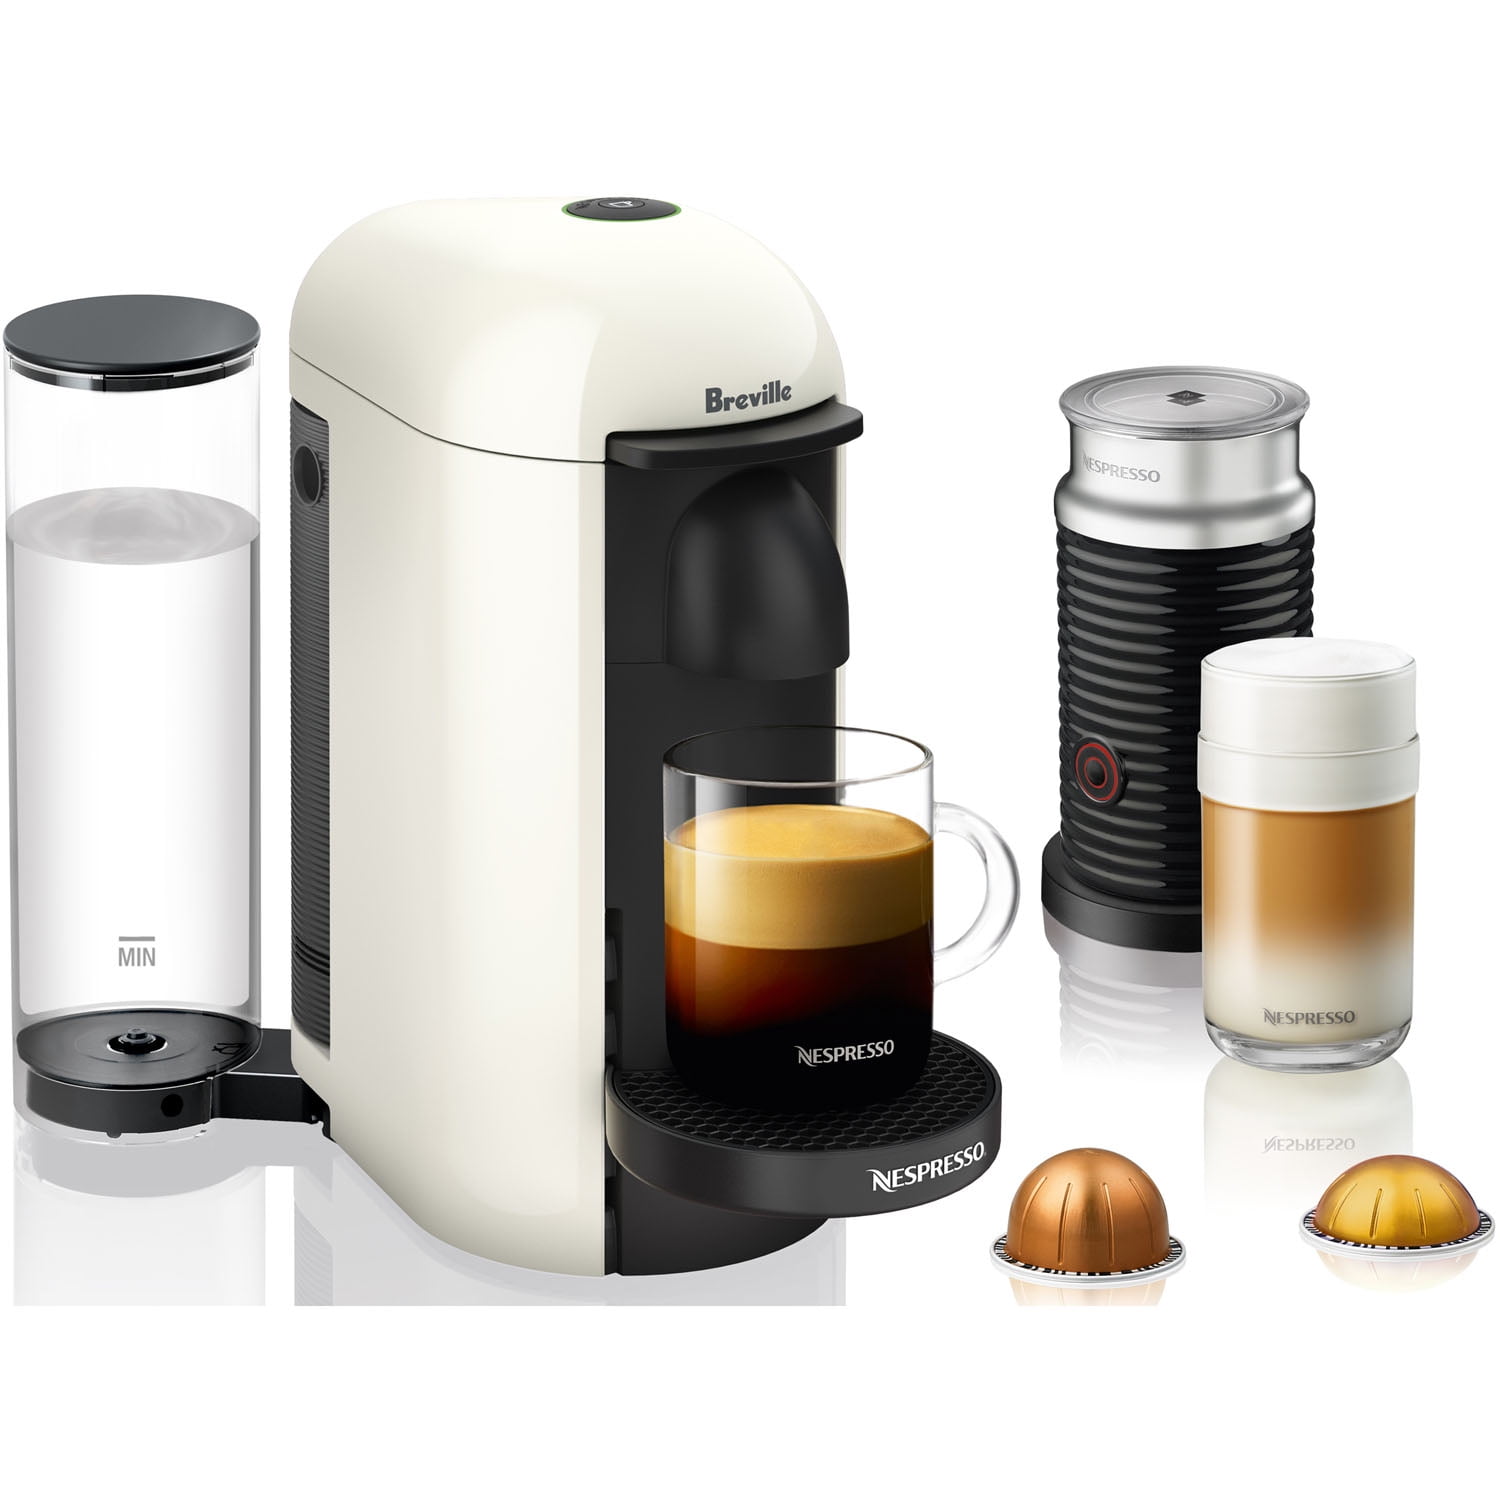 Vertuo Next White & Milk Frother Bundle, Vertuo Coffee Machine